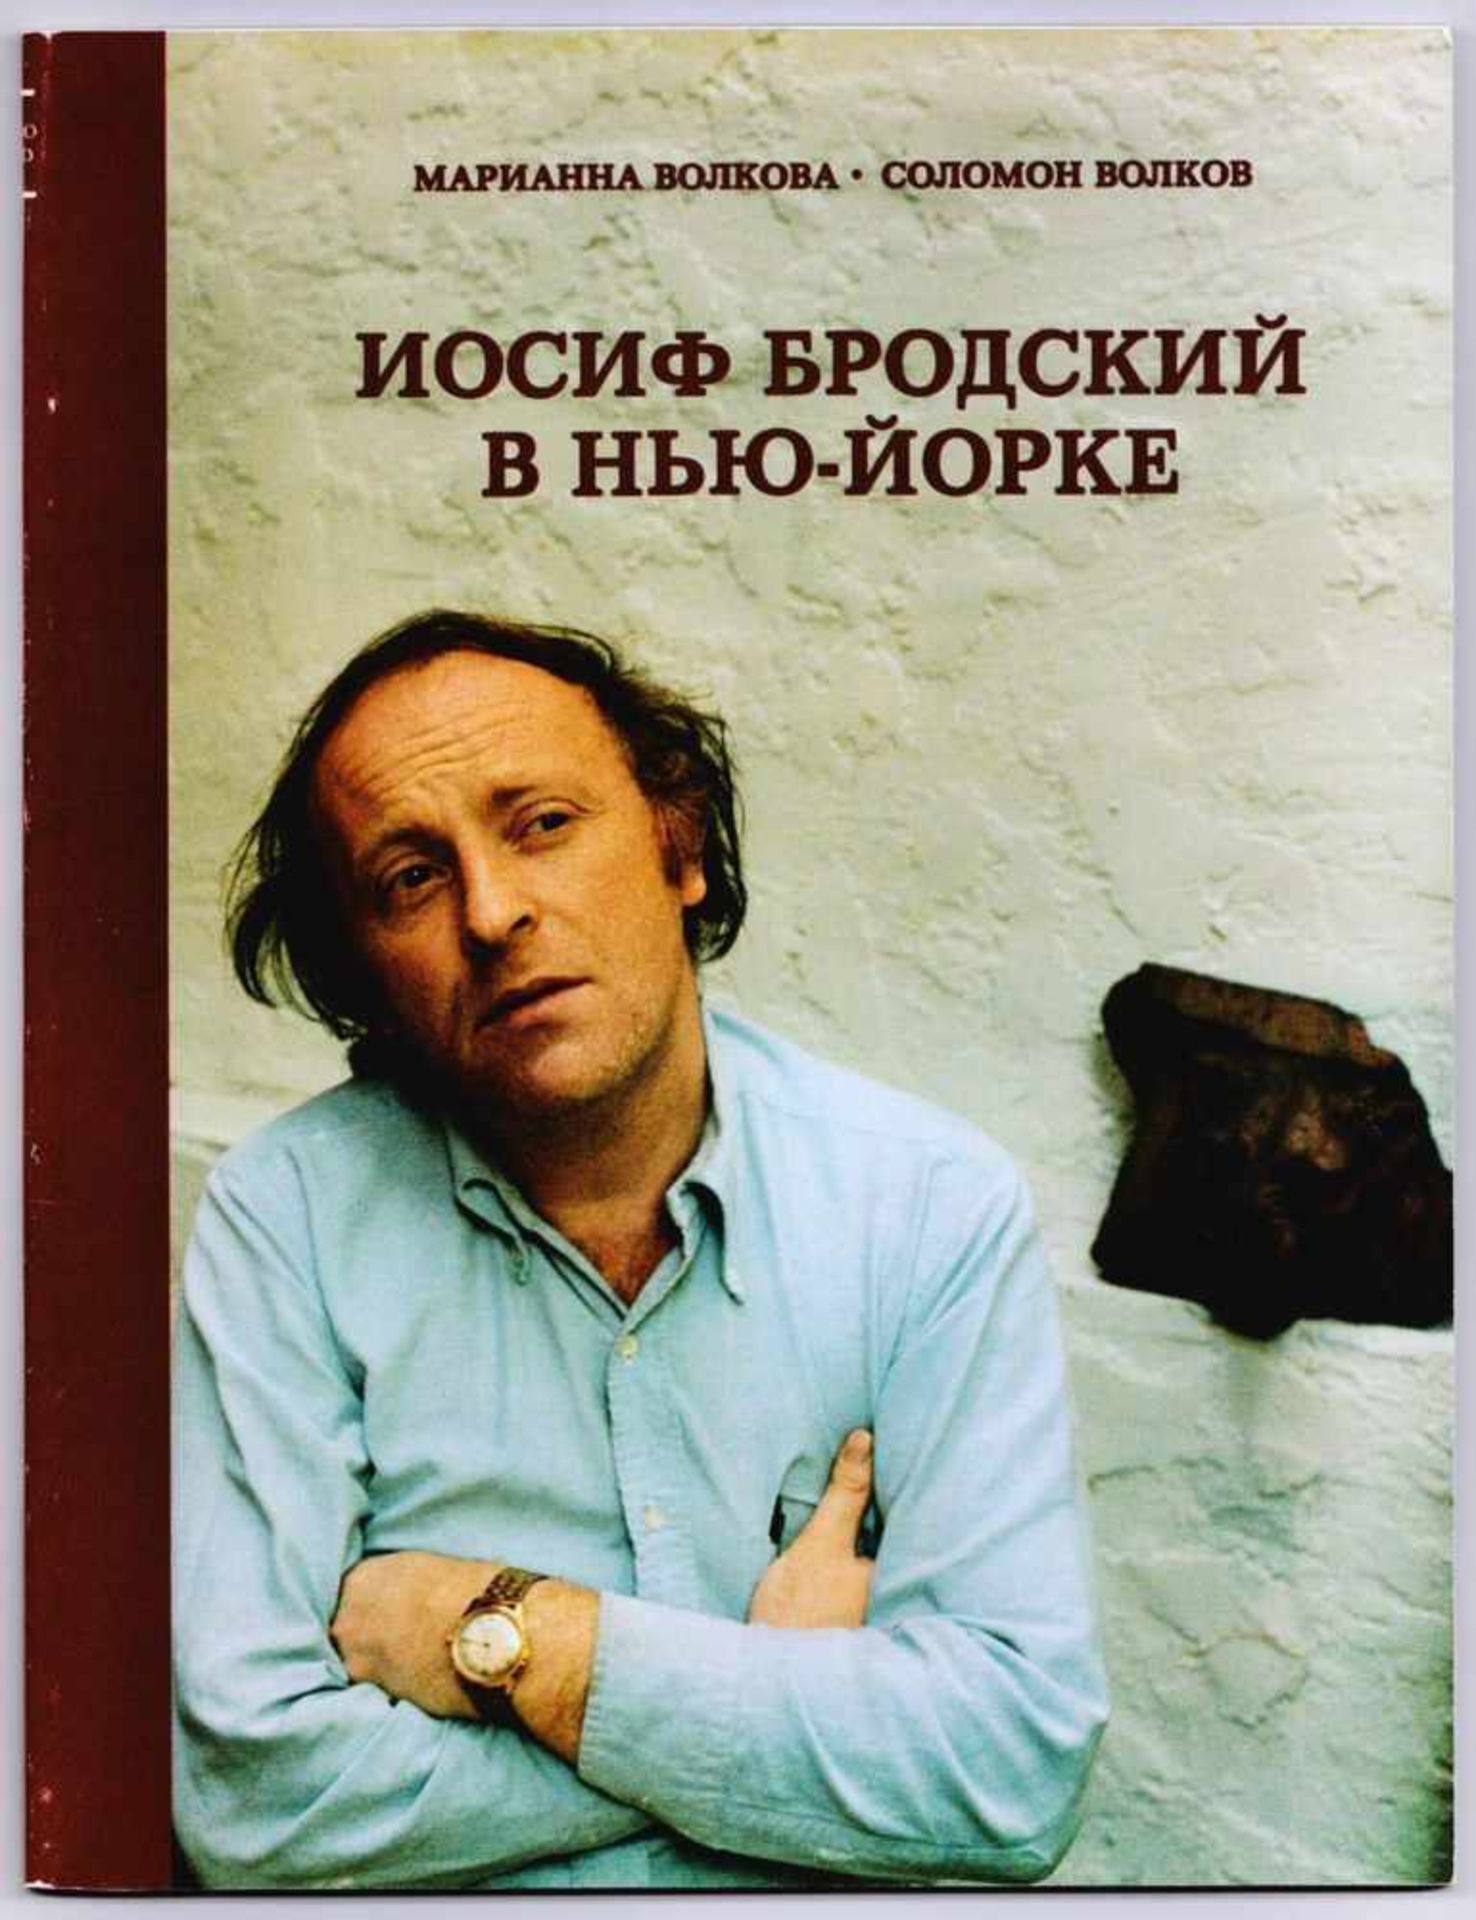 Volkova, M., Volkov, S. [autograph]. Joseph Brodsky in New York: Photoportraits and conversantions